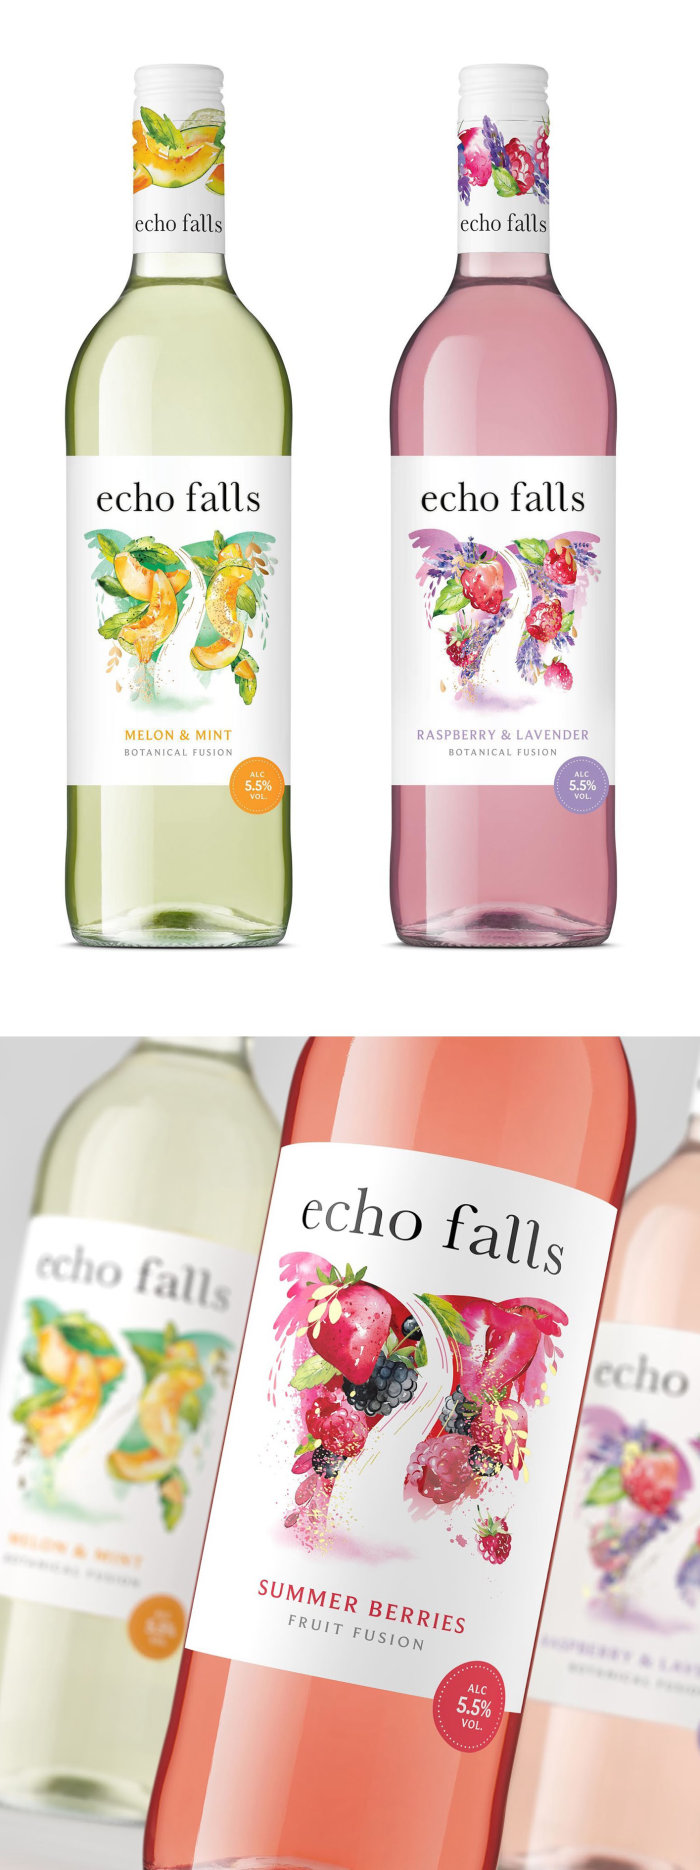 Food & Drink Echo Falls wine
